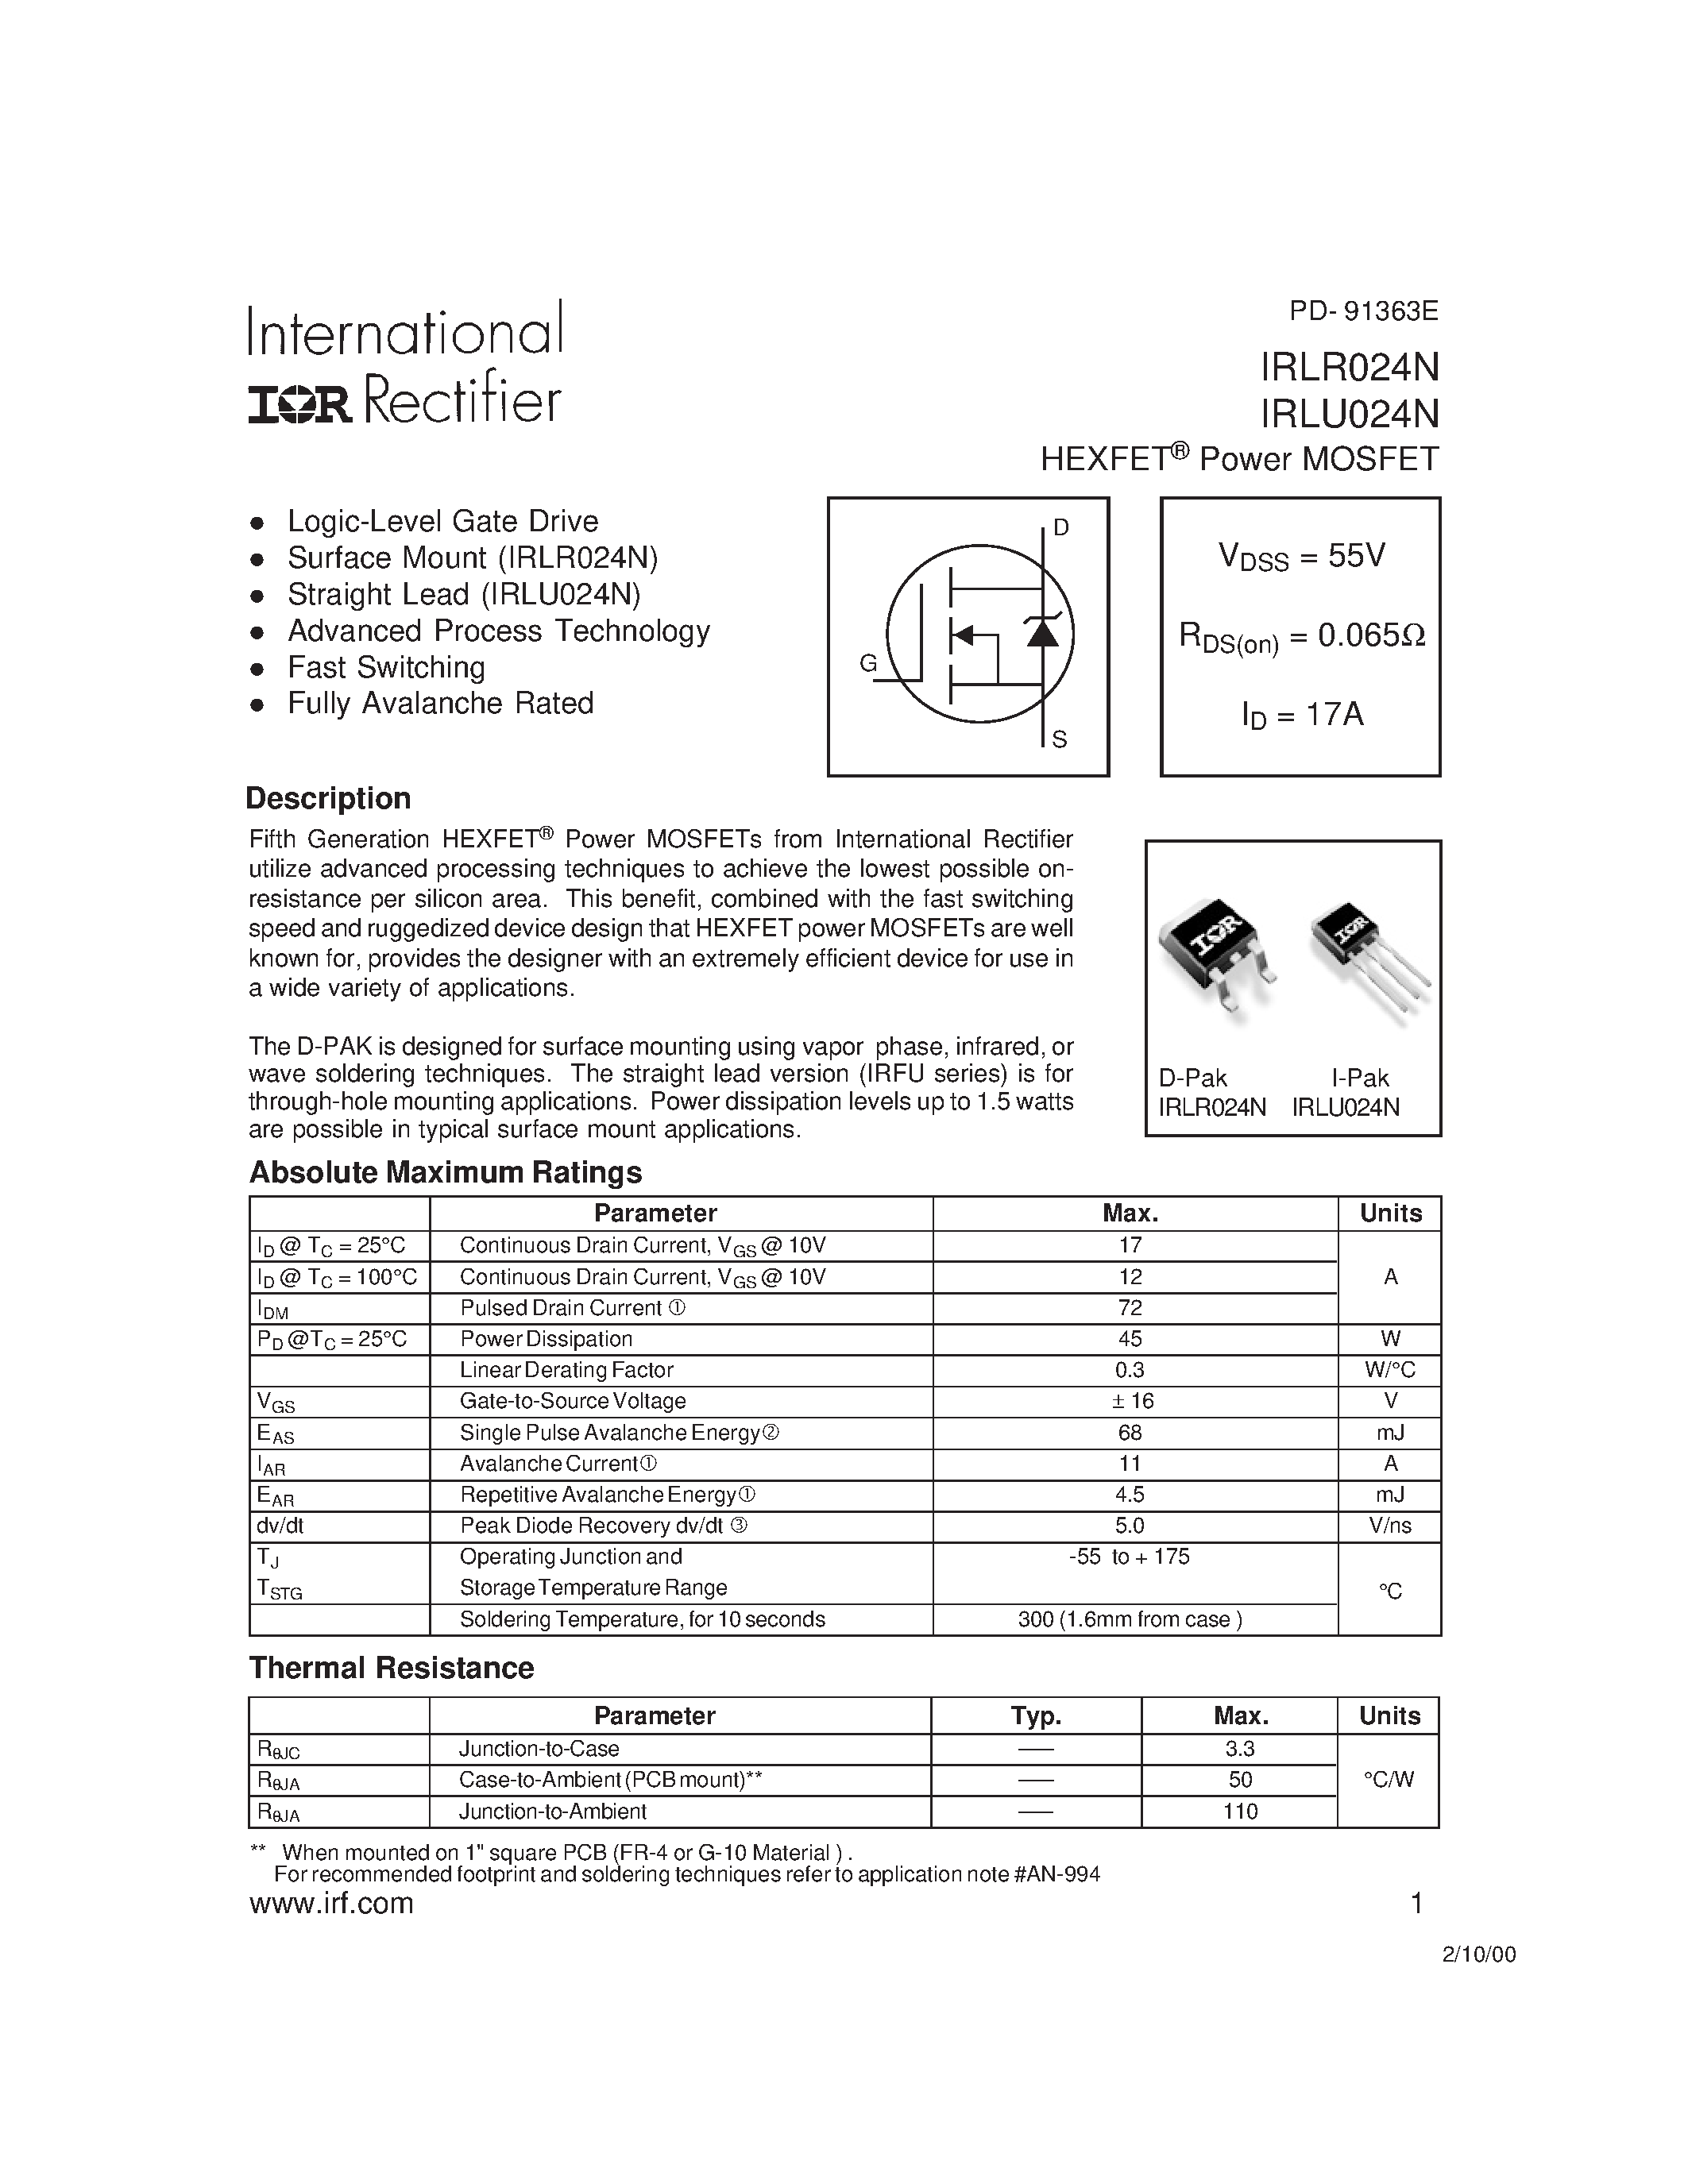 Даташит IRLR024N - (IRLU/R024N) Power MOSFET страница 1